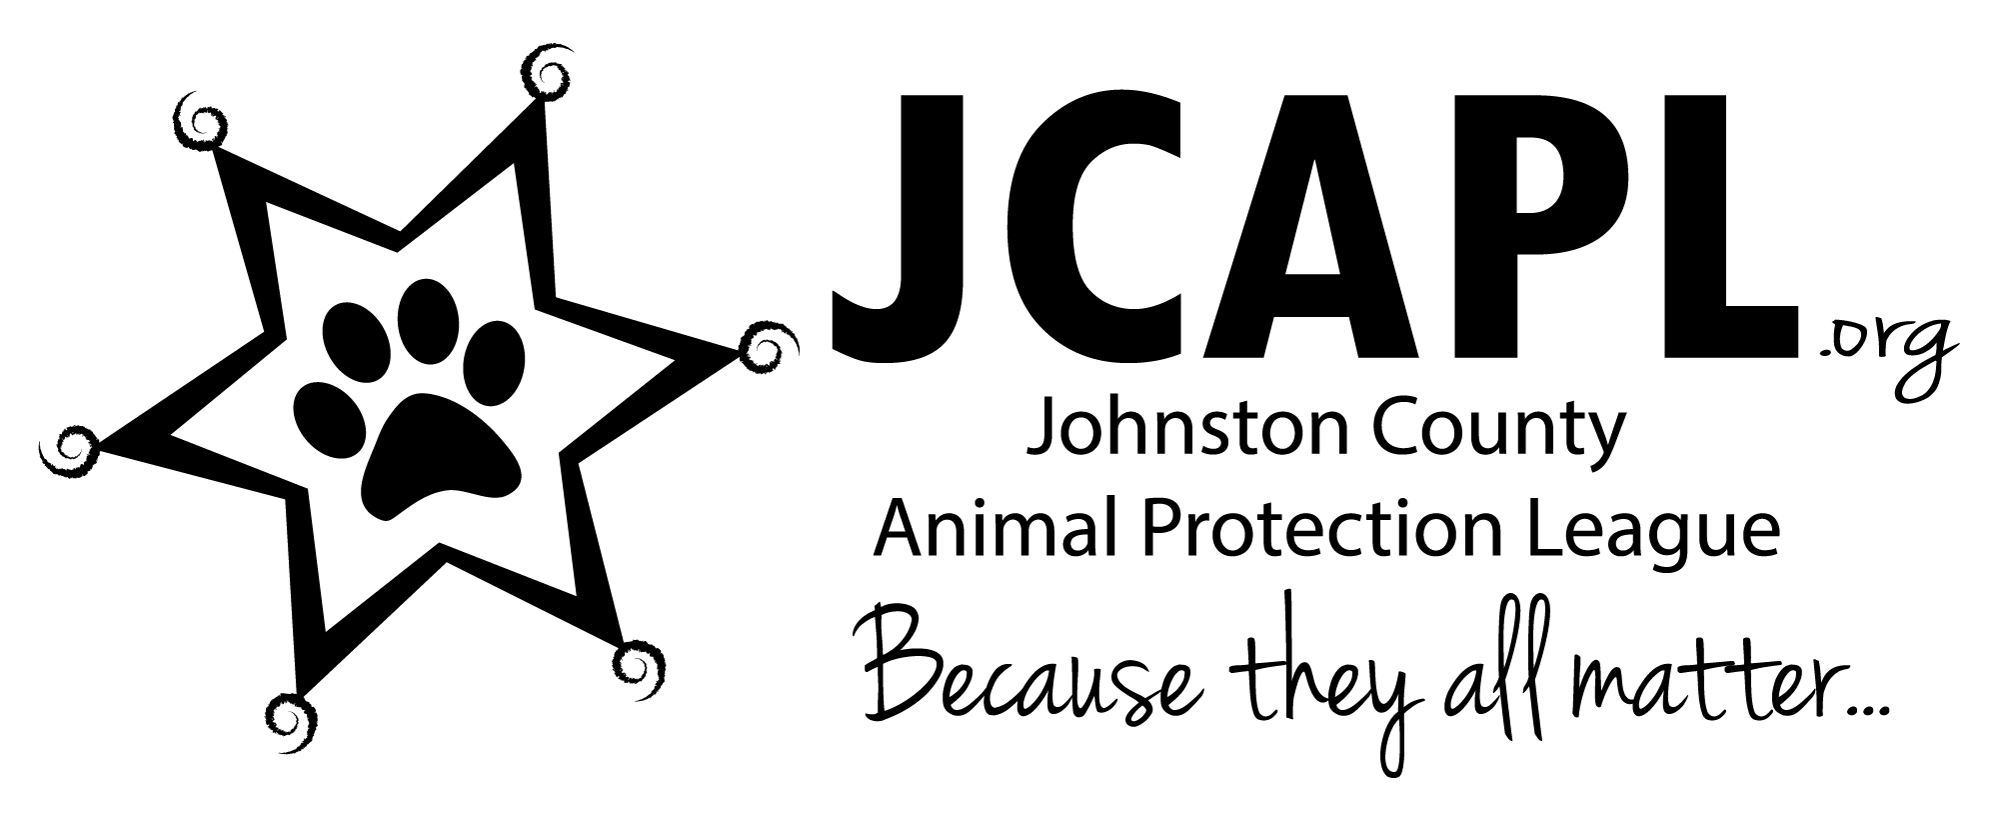 Sponsor Johnston County Animal Protection League